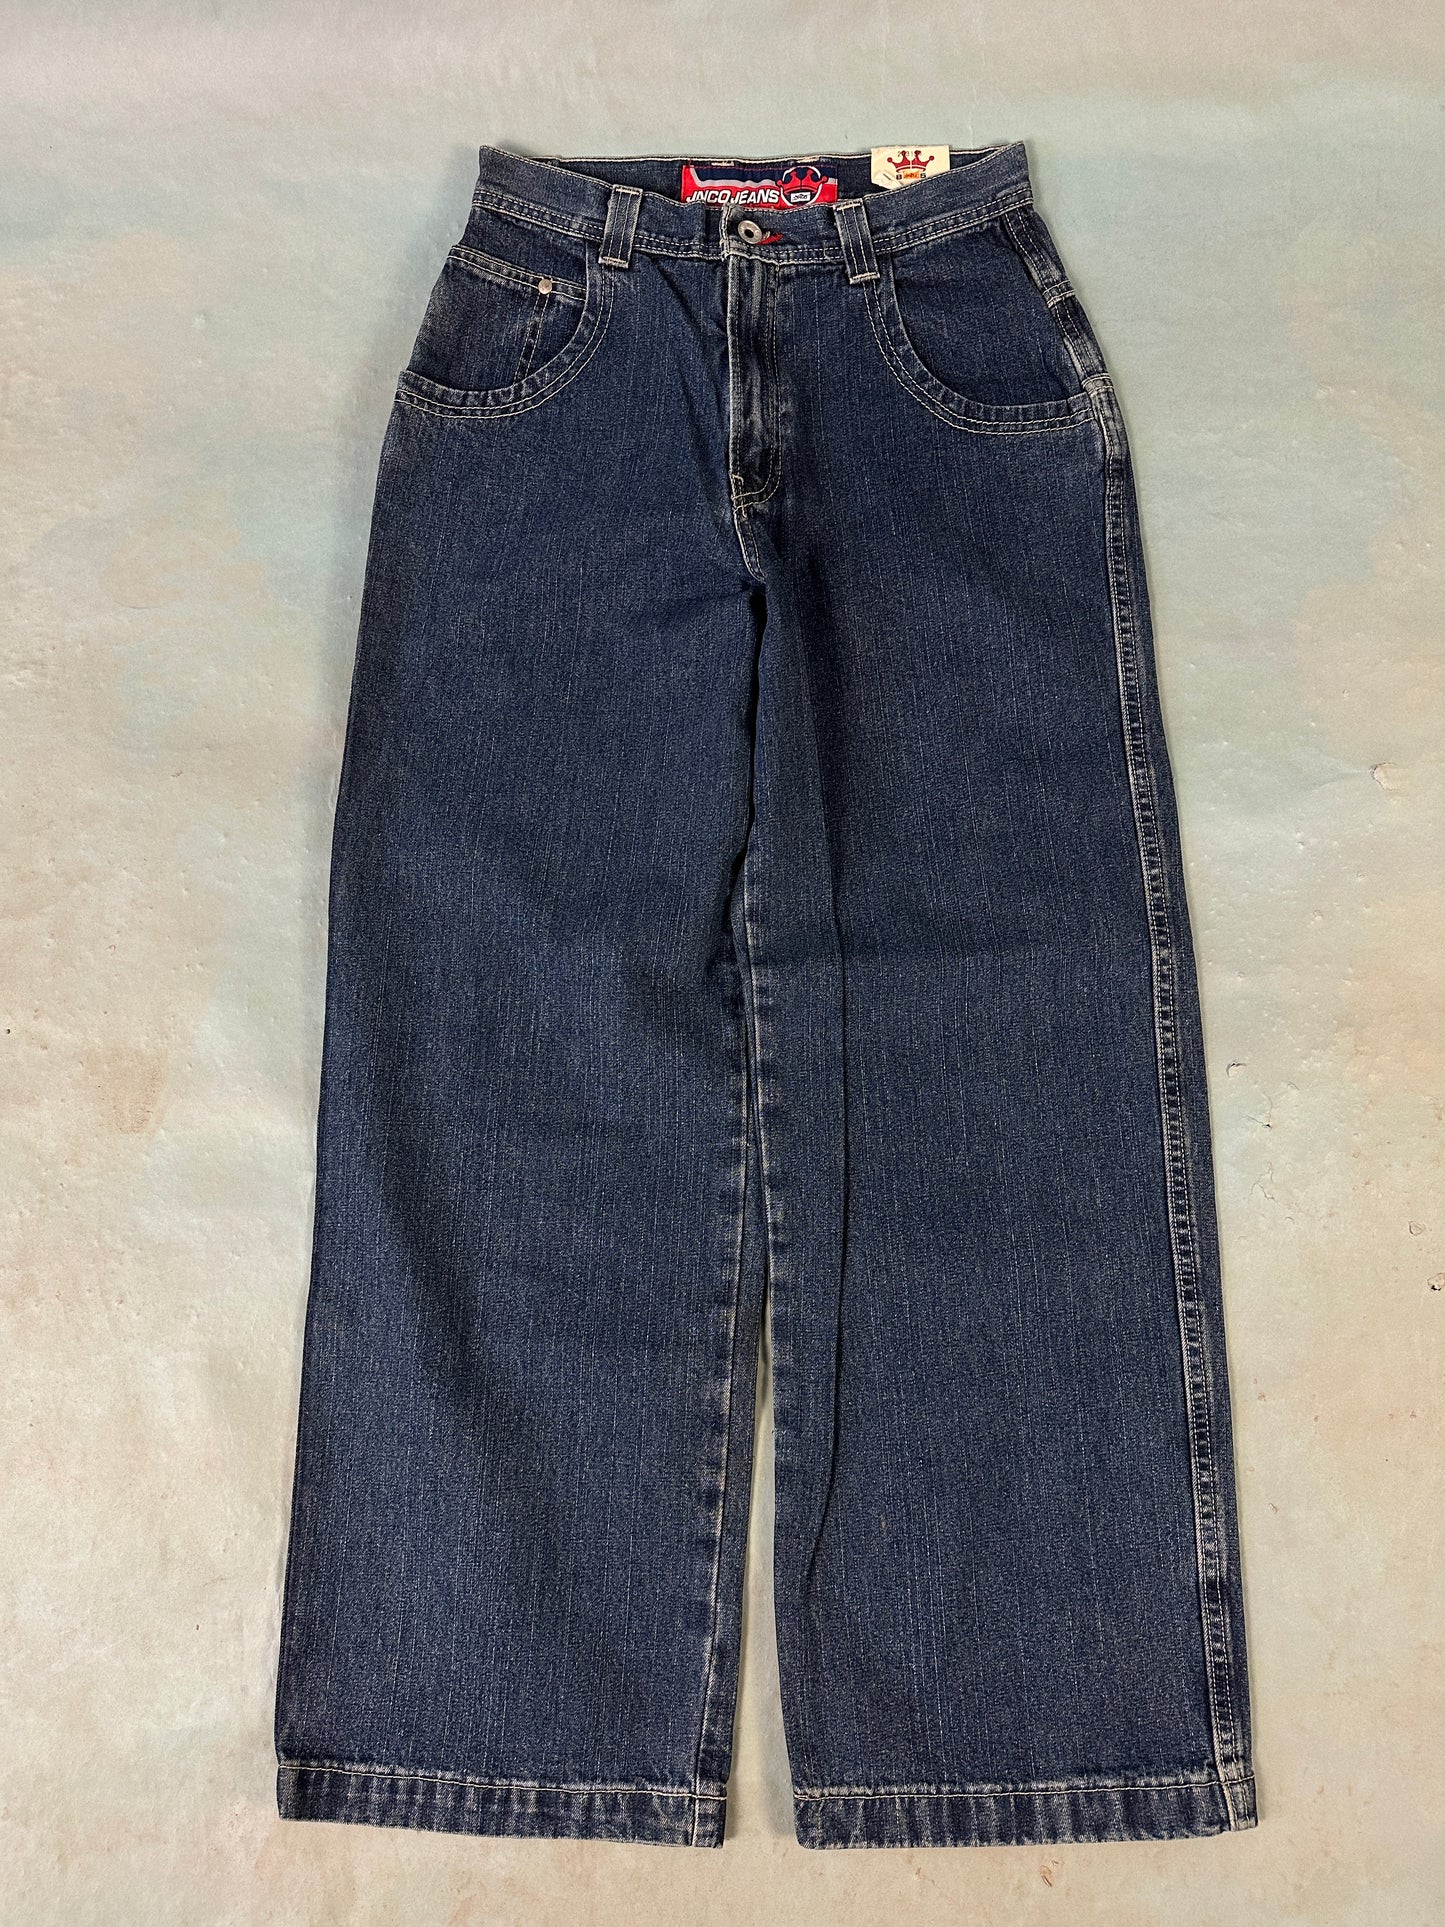 Deadstock JNCO Dragon Vintage Baggy Jeans - 30 x 29